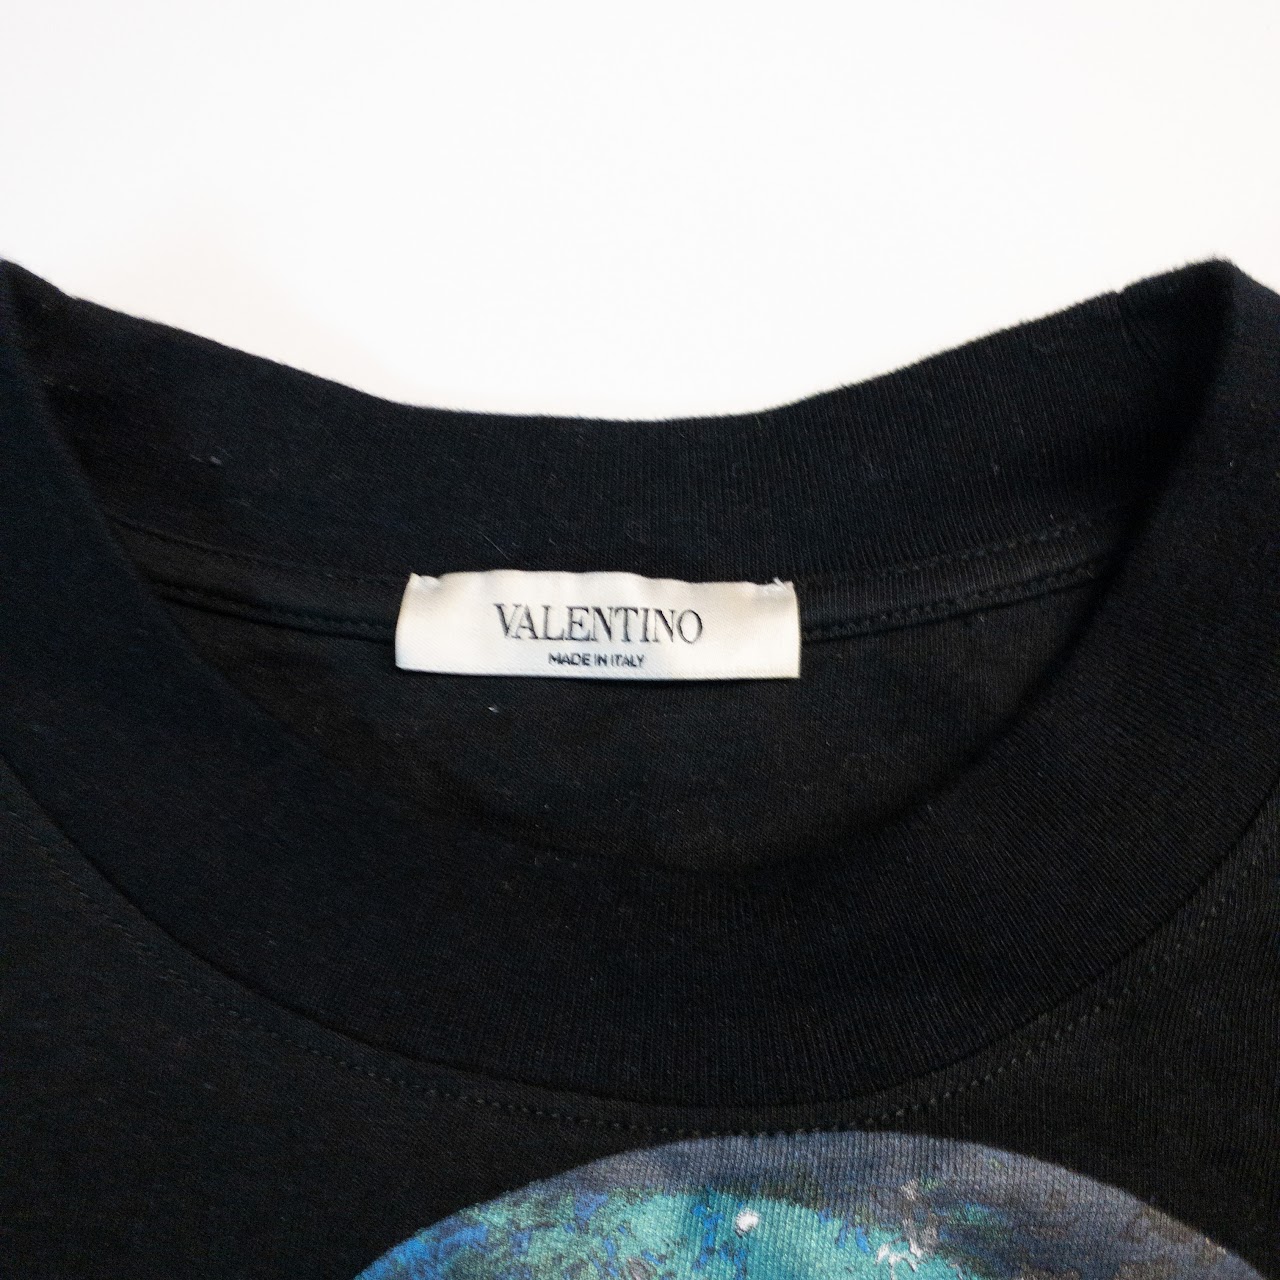 Valentino Astronaut T-Shirt